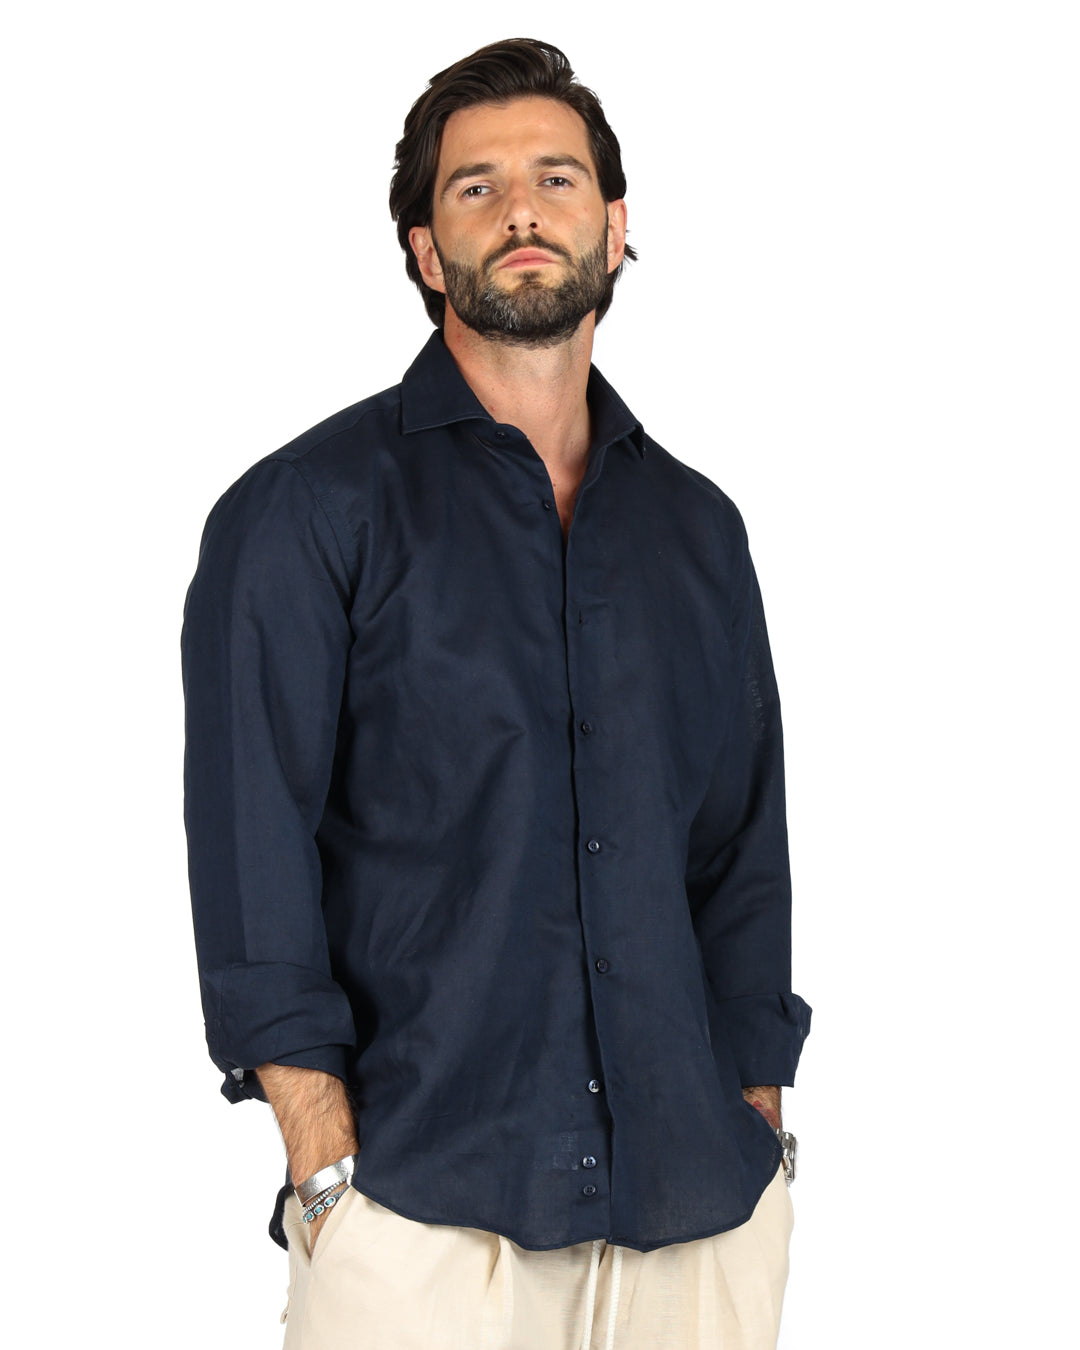 Praiano - Camicia classica blu in lino